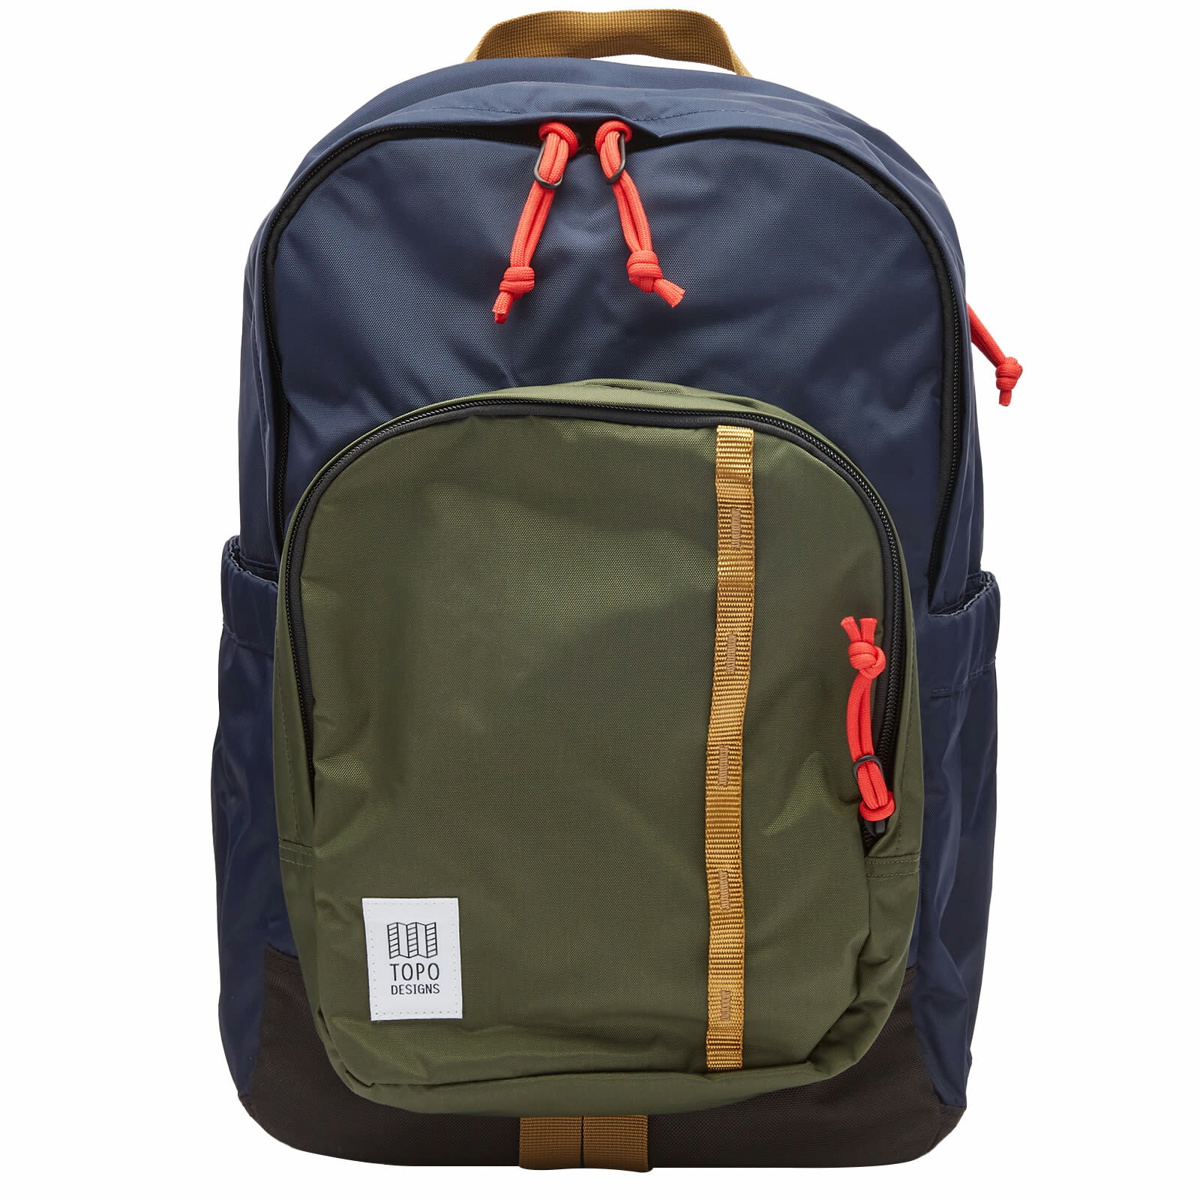 Topo Designs Peak Pack Backpack in Olive/Navy Topo Designs